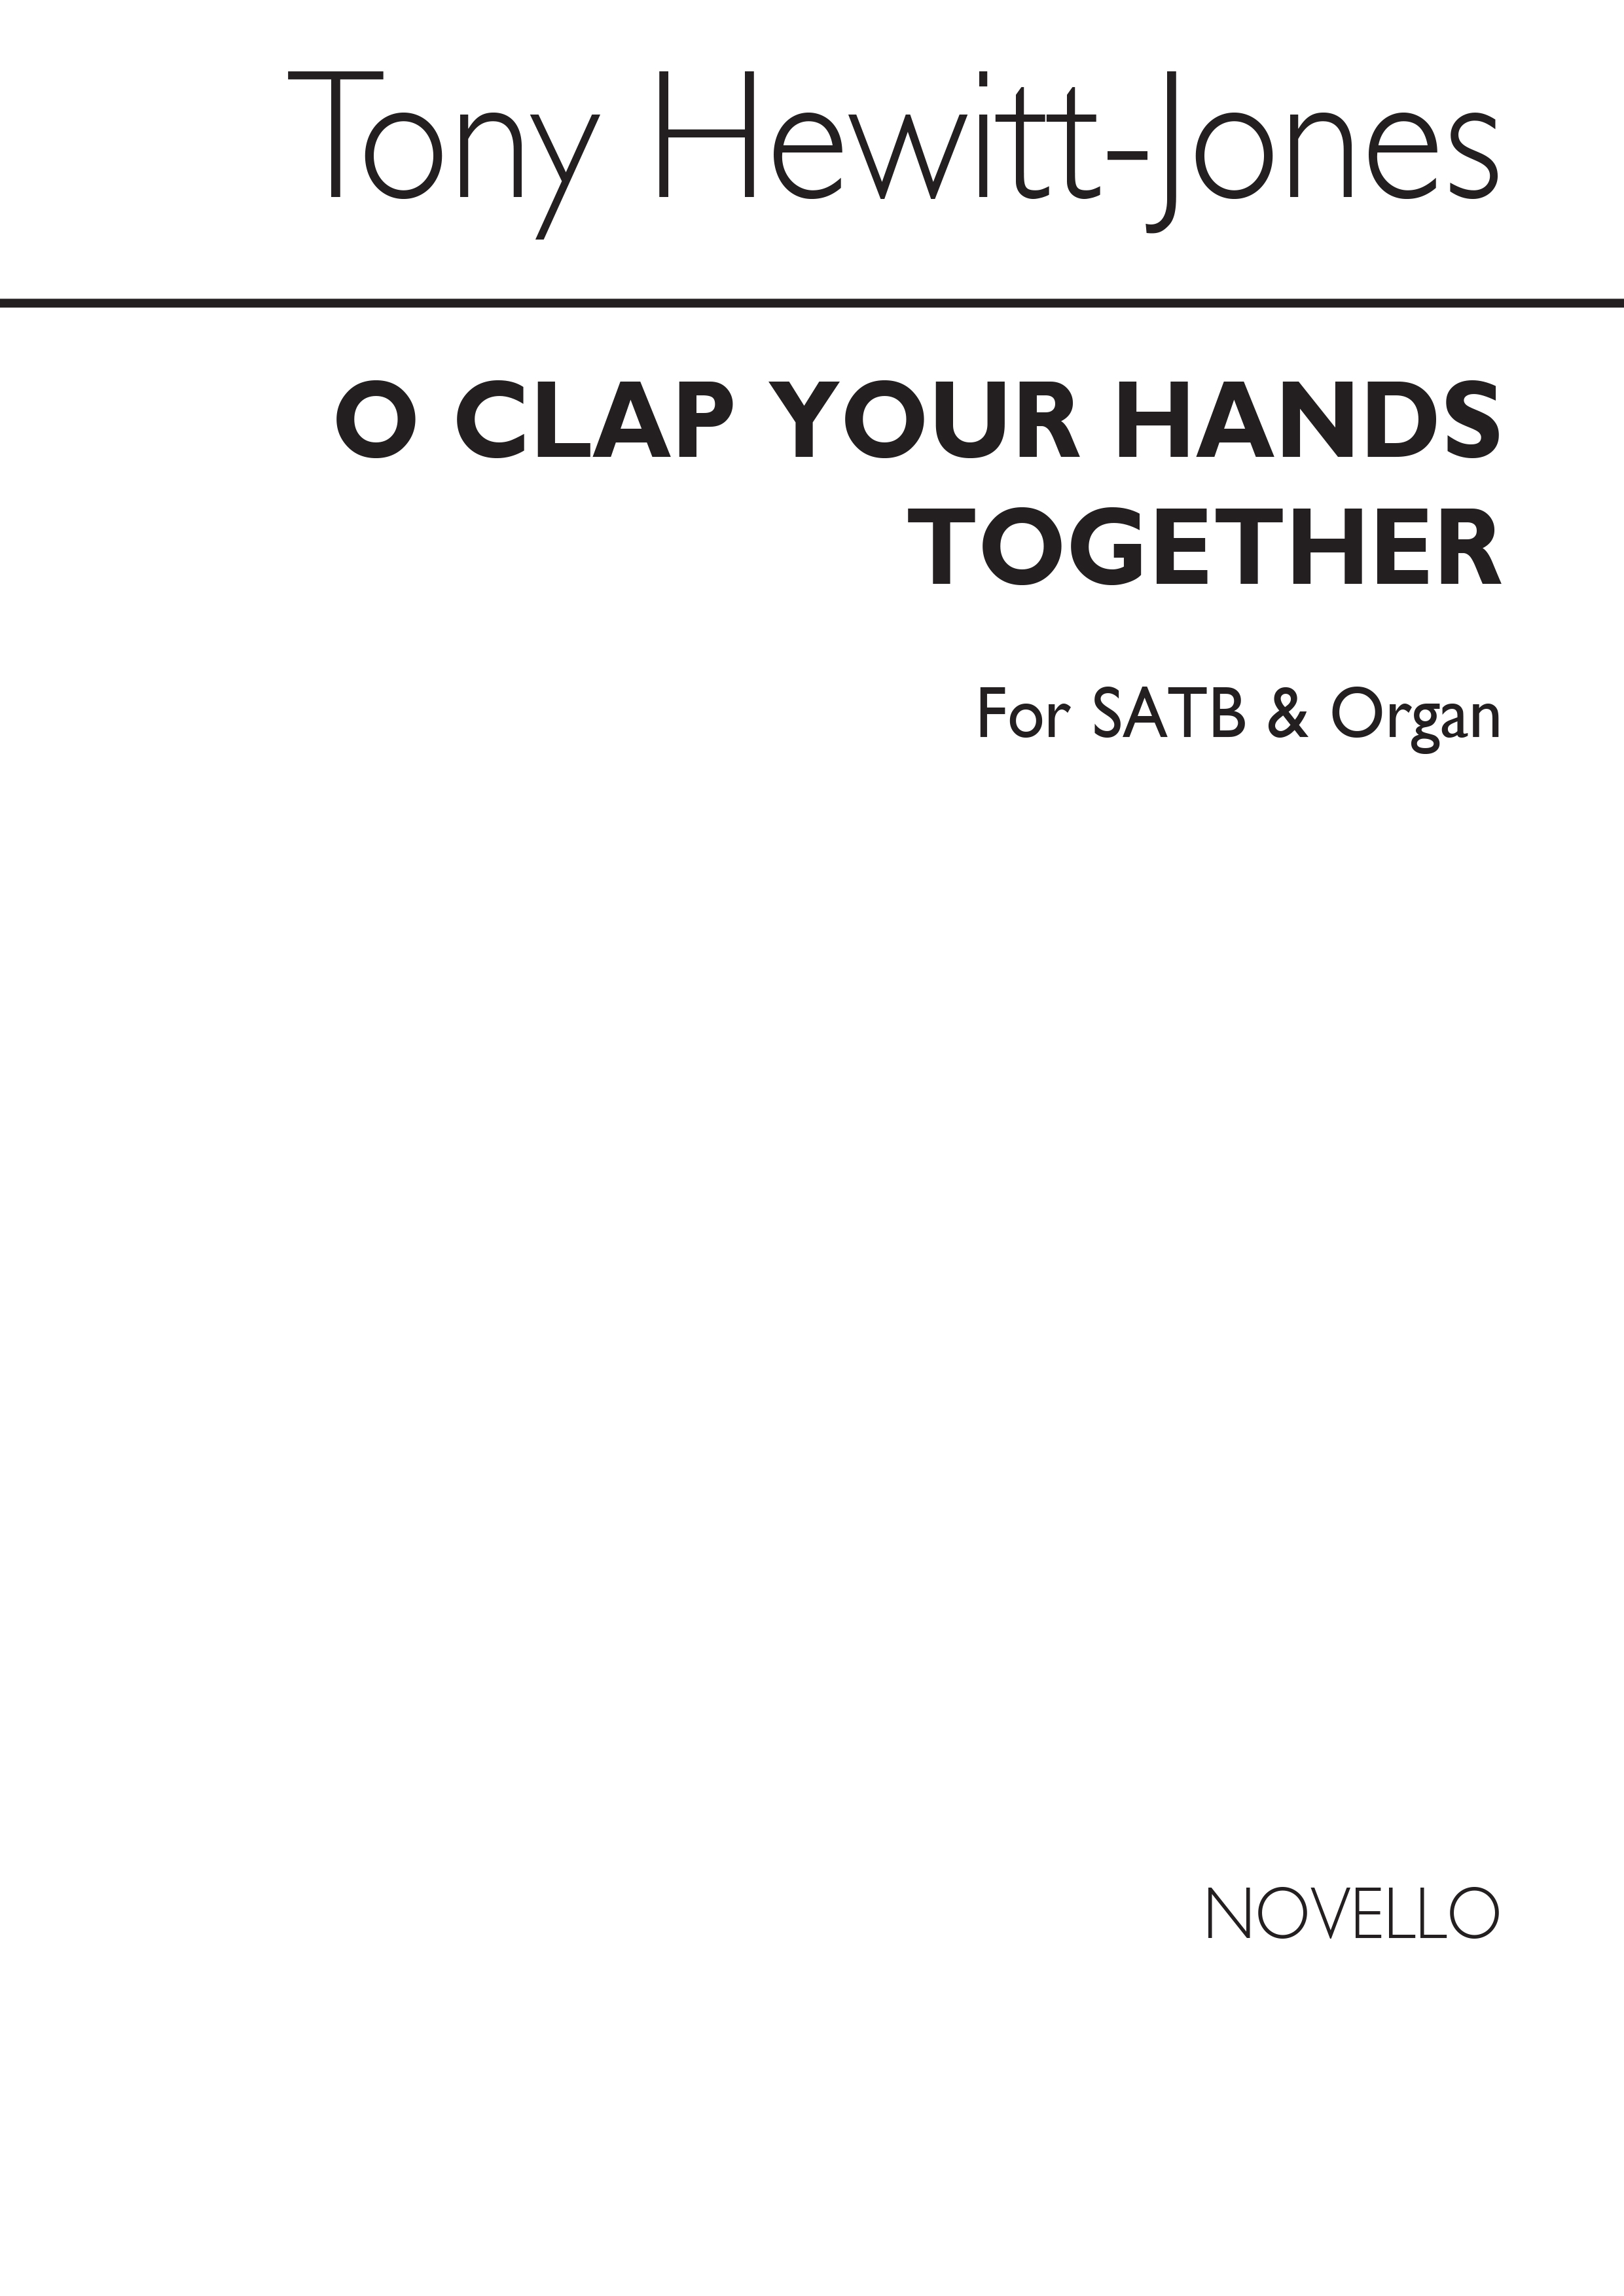 Hewitt-jones, T O Clap Your Hands Together Satb/Organ